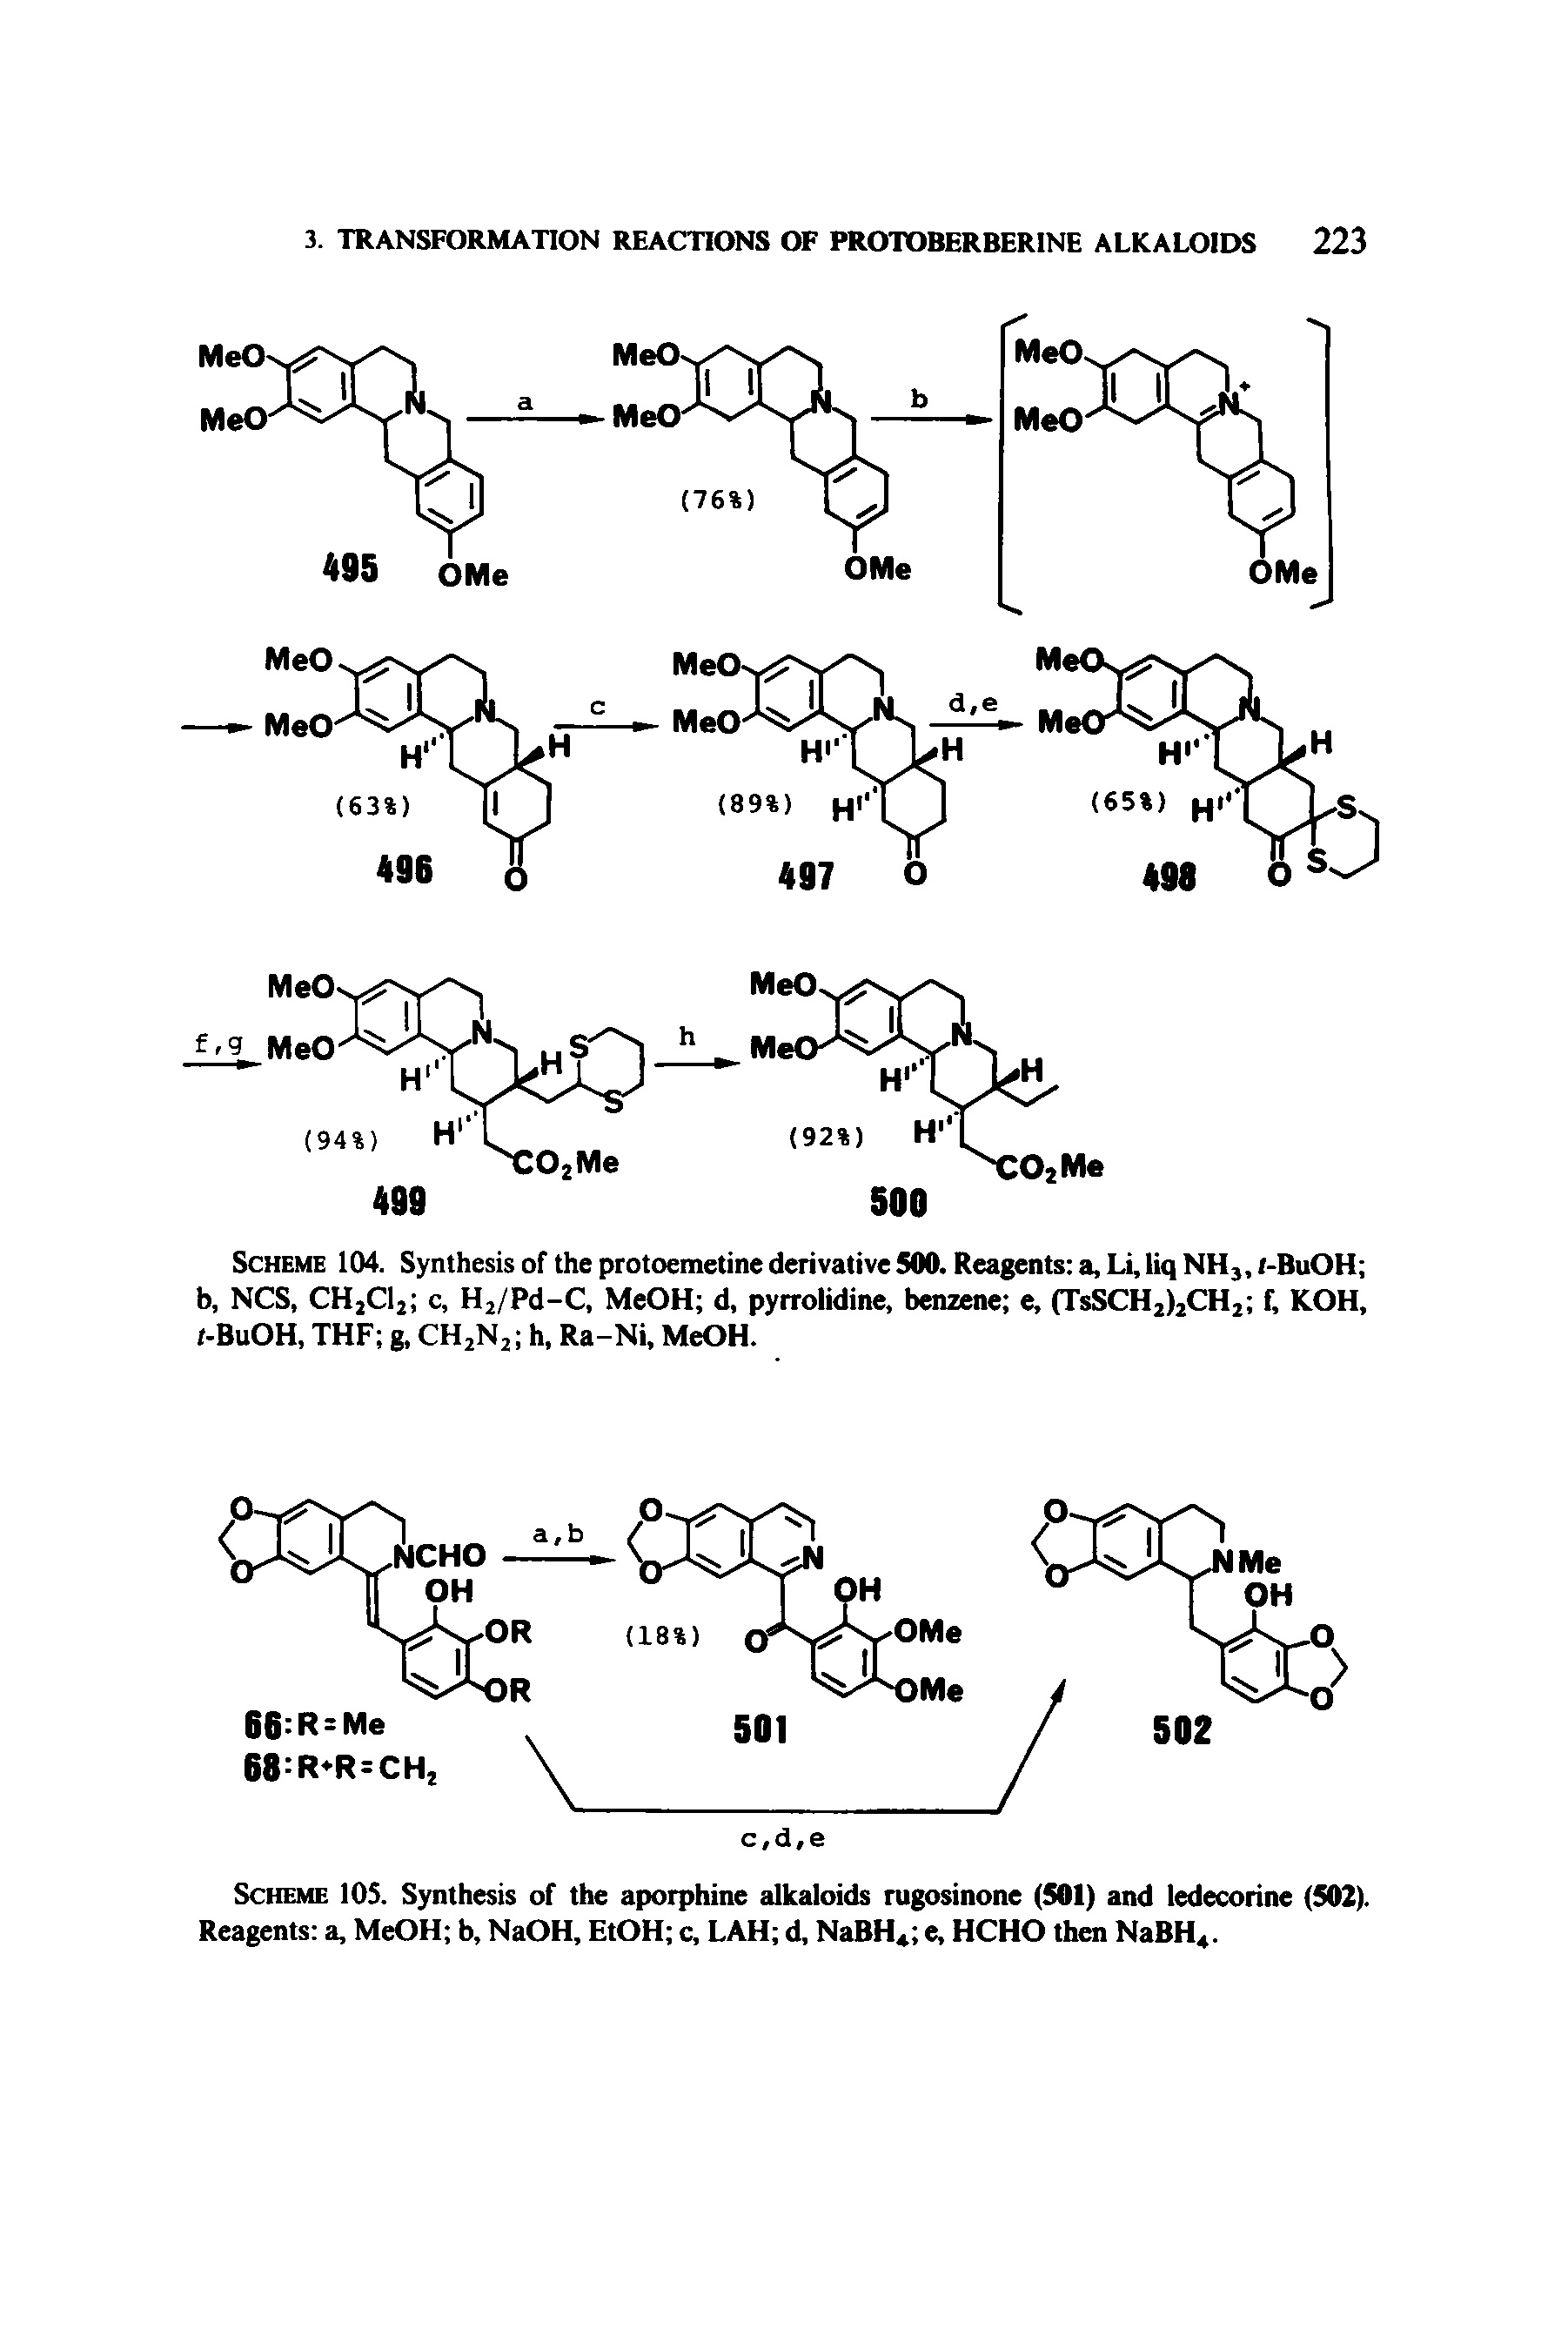 Scheme 105. Synthesis of the aporphine alkaloids rugosinone (501) and ledecorine (502). Reagents a, MeOH b, NaOH, EtOH c, LAH d, NaBH e, HCHO then NaBH4.